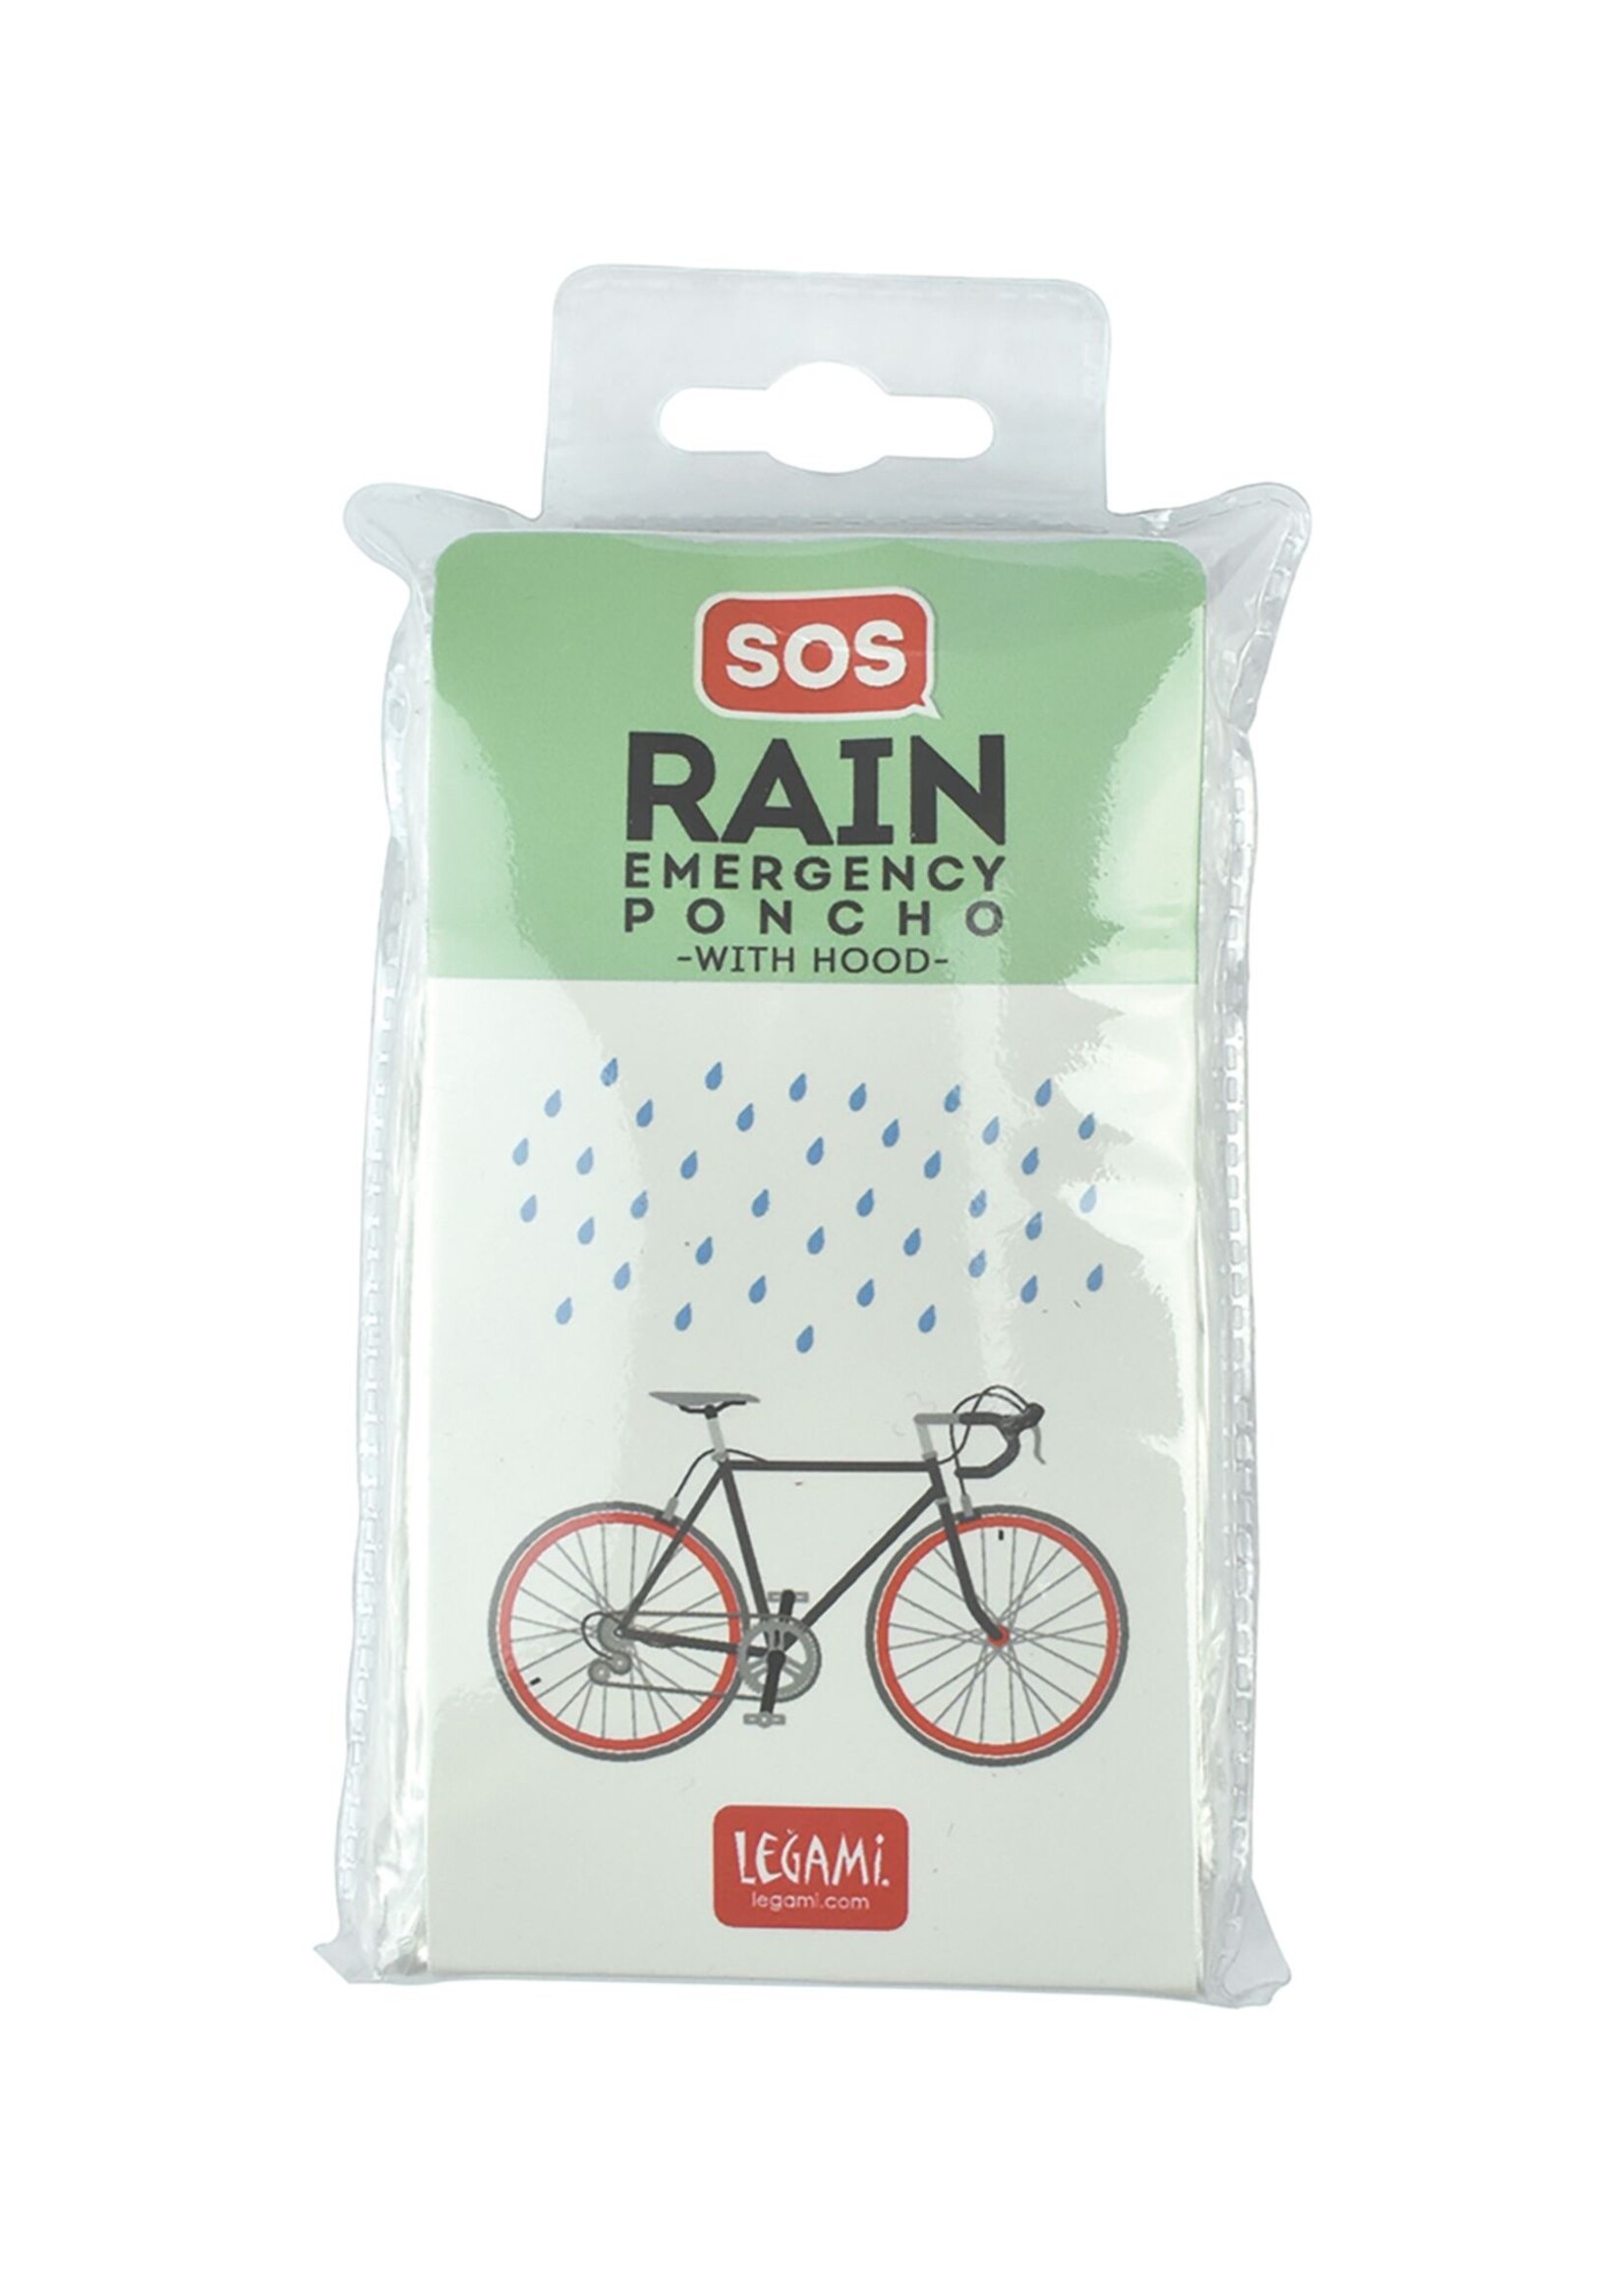 LEGAMI Einweg-Regenponcho mit Kapuze - Sos Rain - Transparent